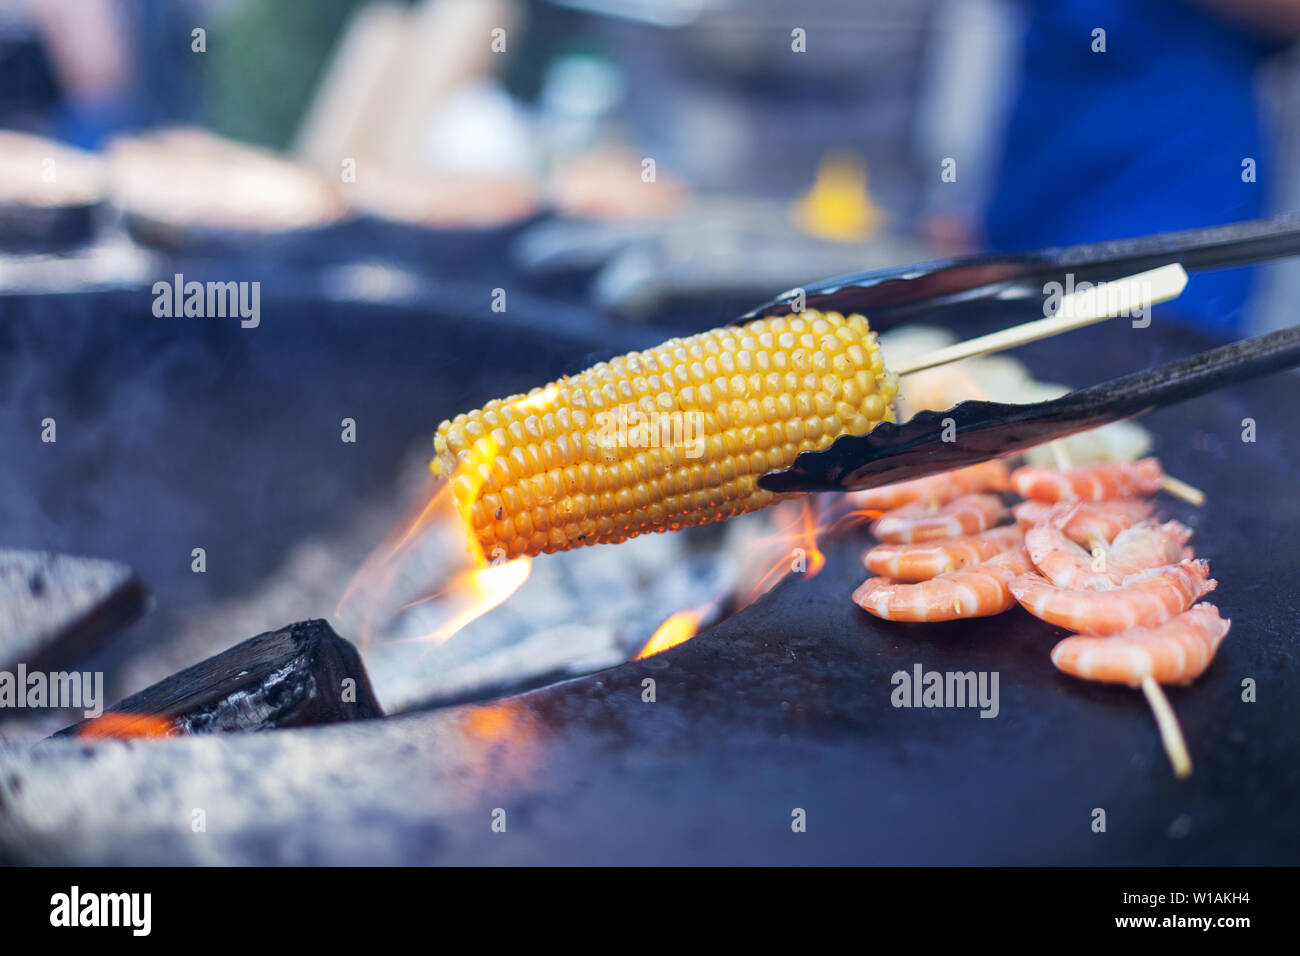 Corn cob on open fire. Concept of street food Stock Photo